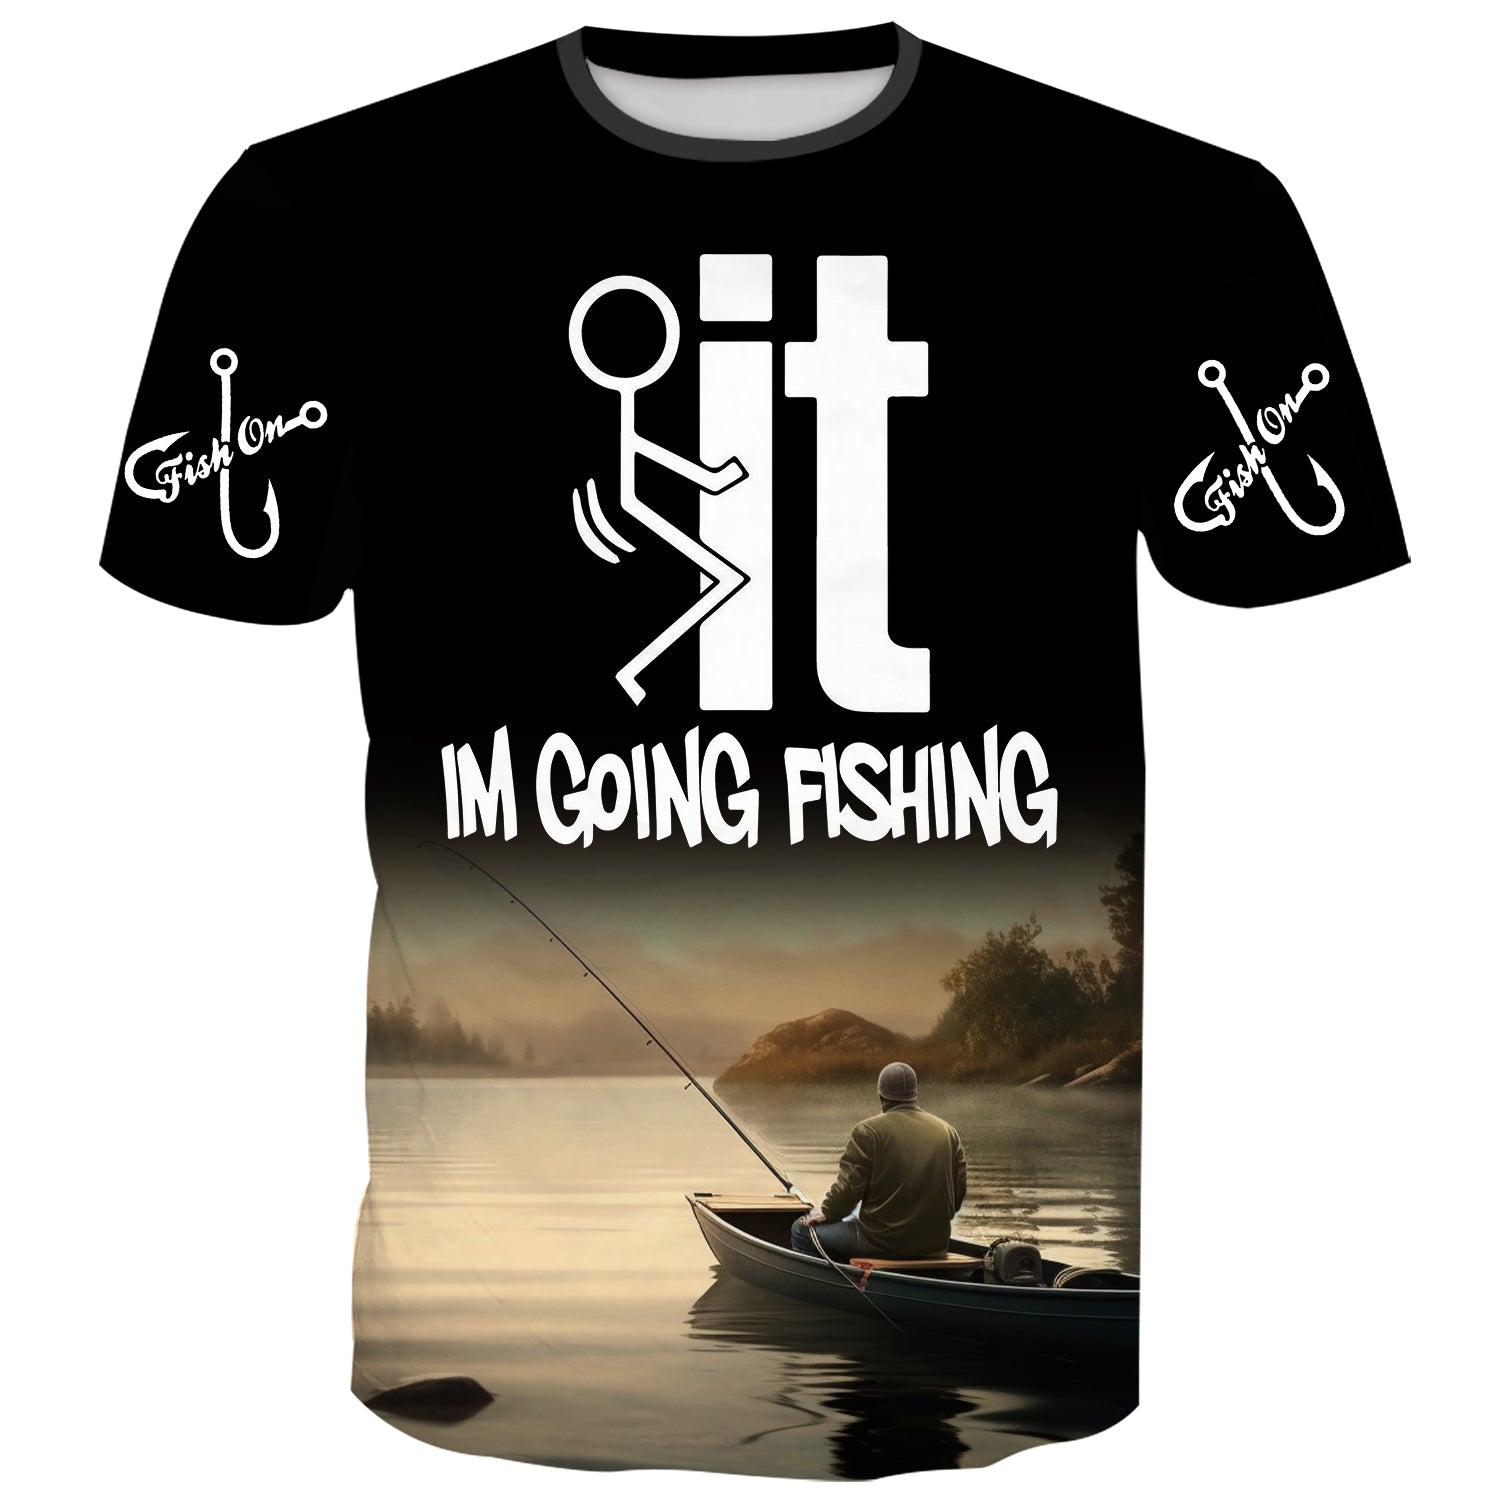 I am going Fishing T-Shirt for Men - Adventure-themed Tee, 2XL